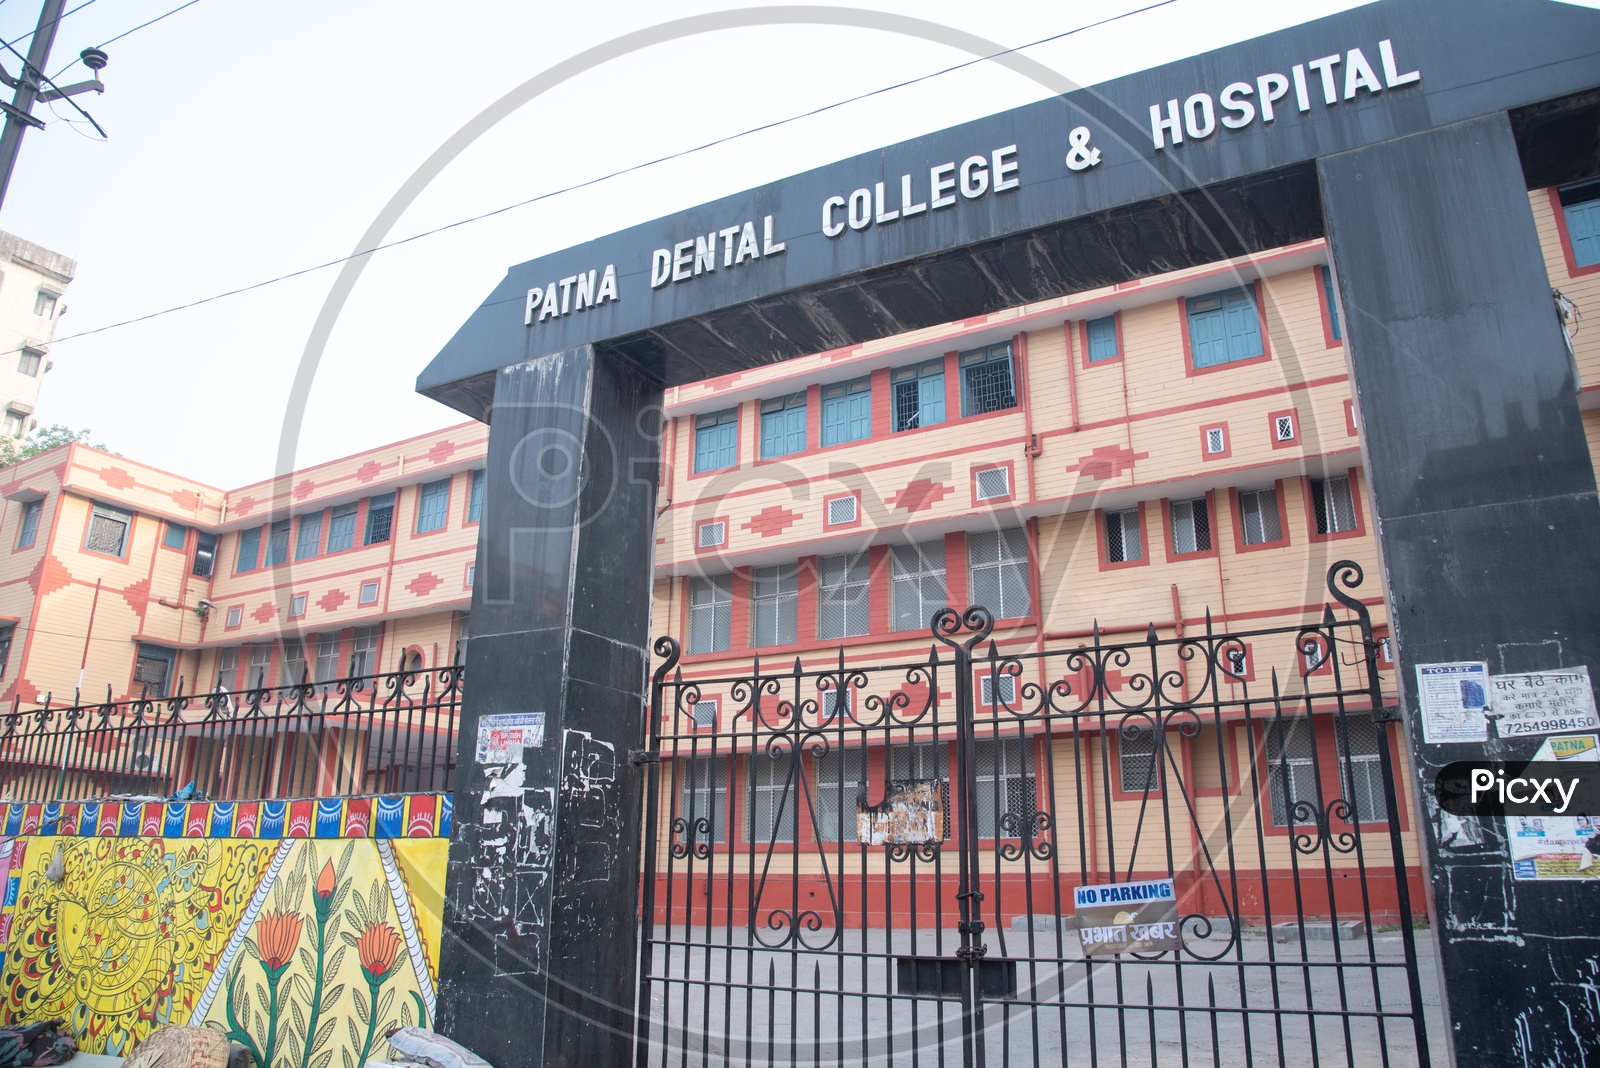 Patna Dental College And Hospital